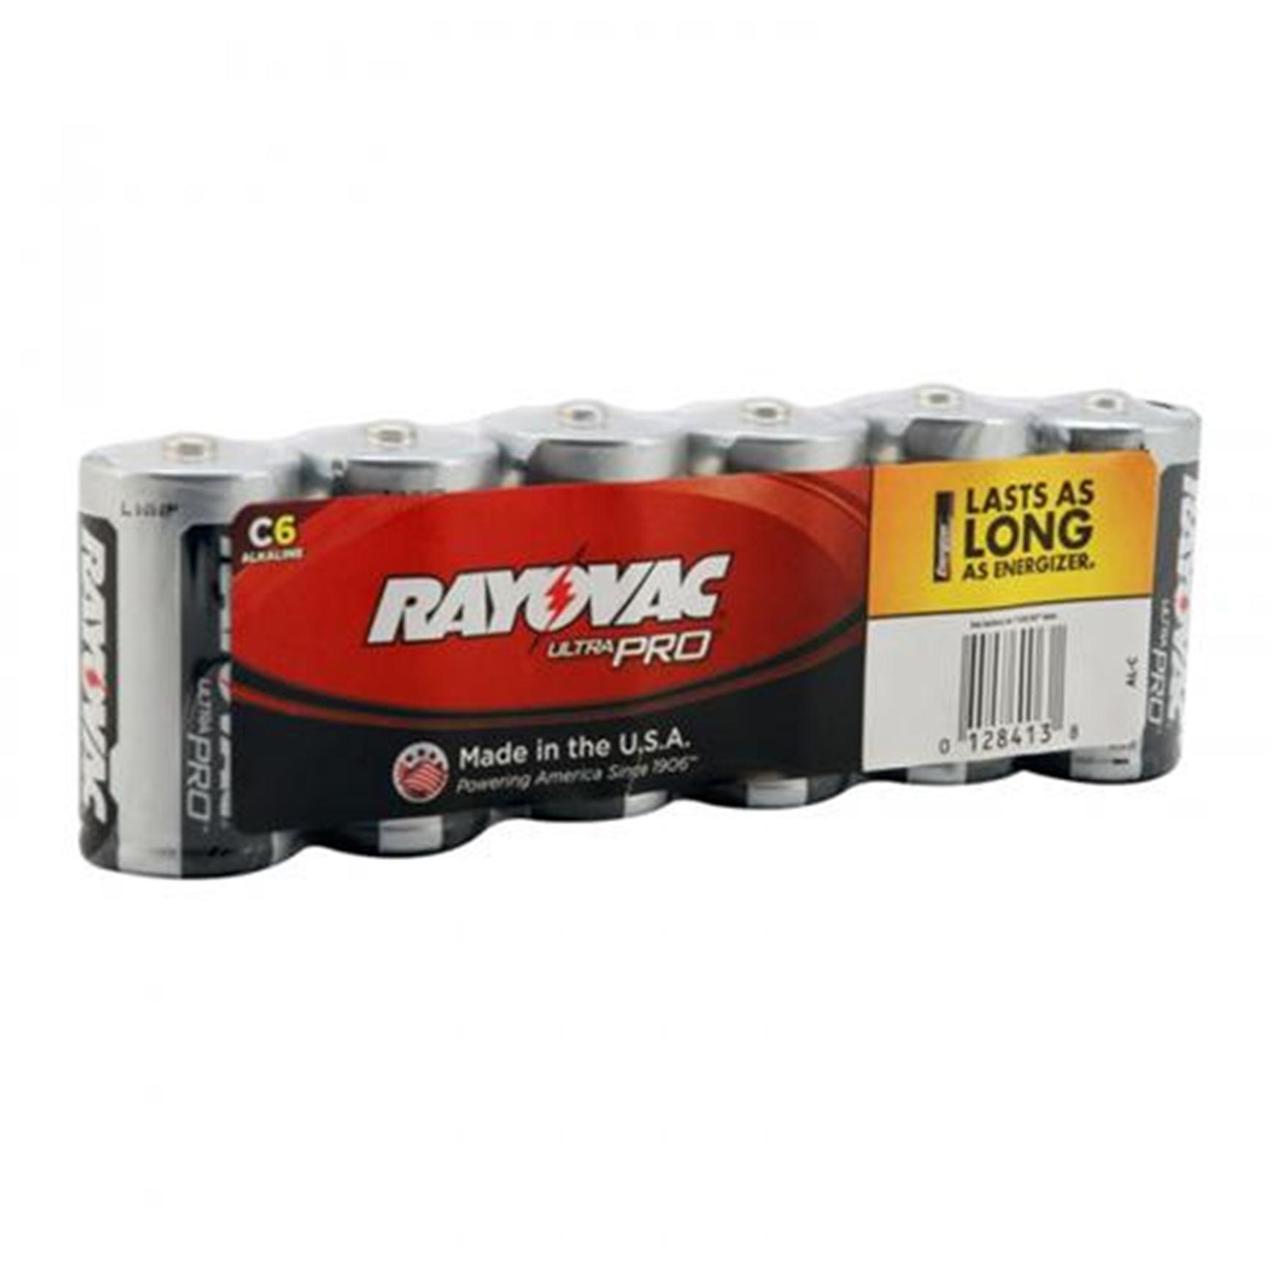 Rayovac  UltraPRO Alkaline C Batteries 6-Pack + FREE SHIPPING!